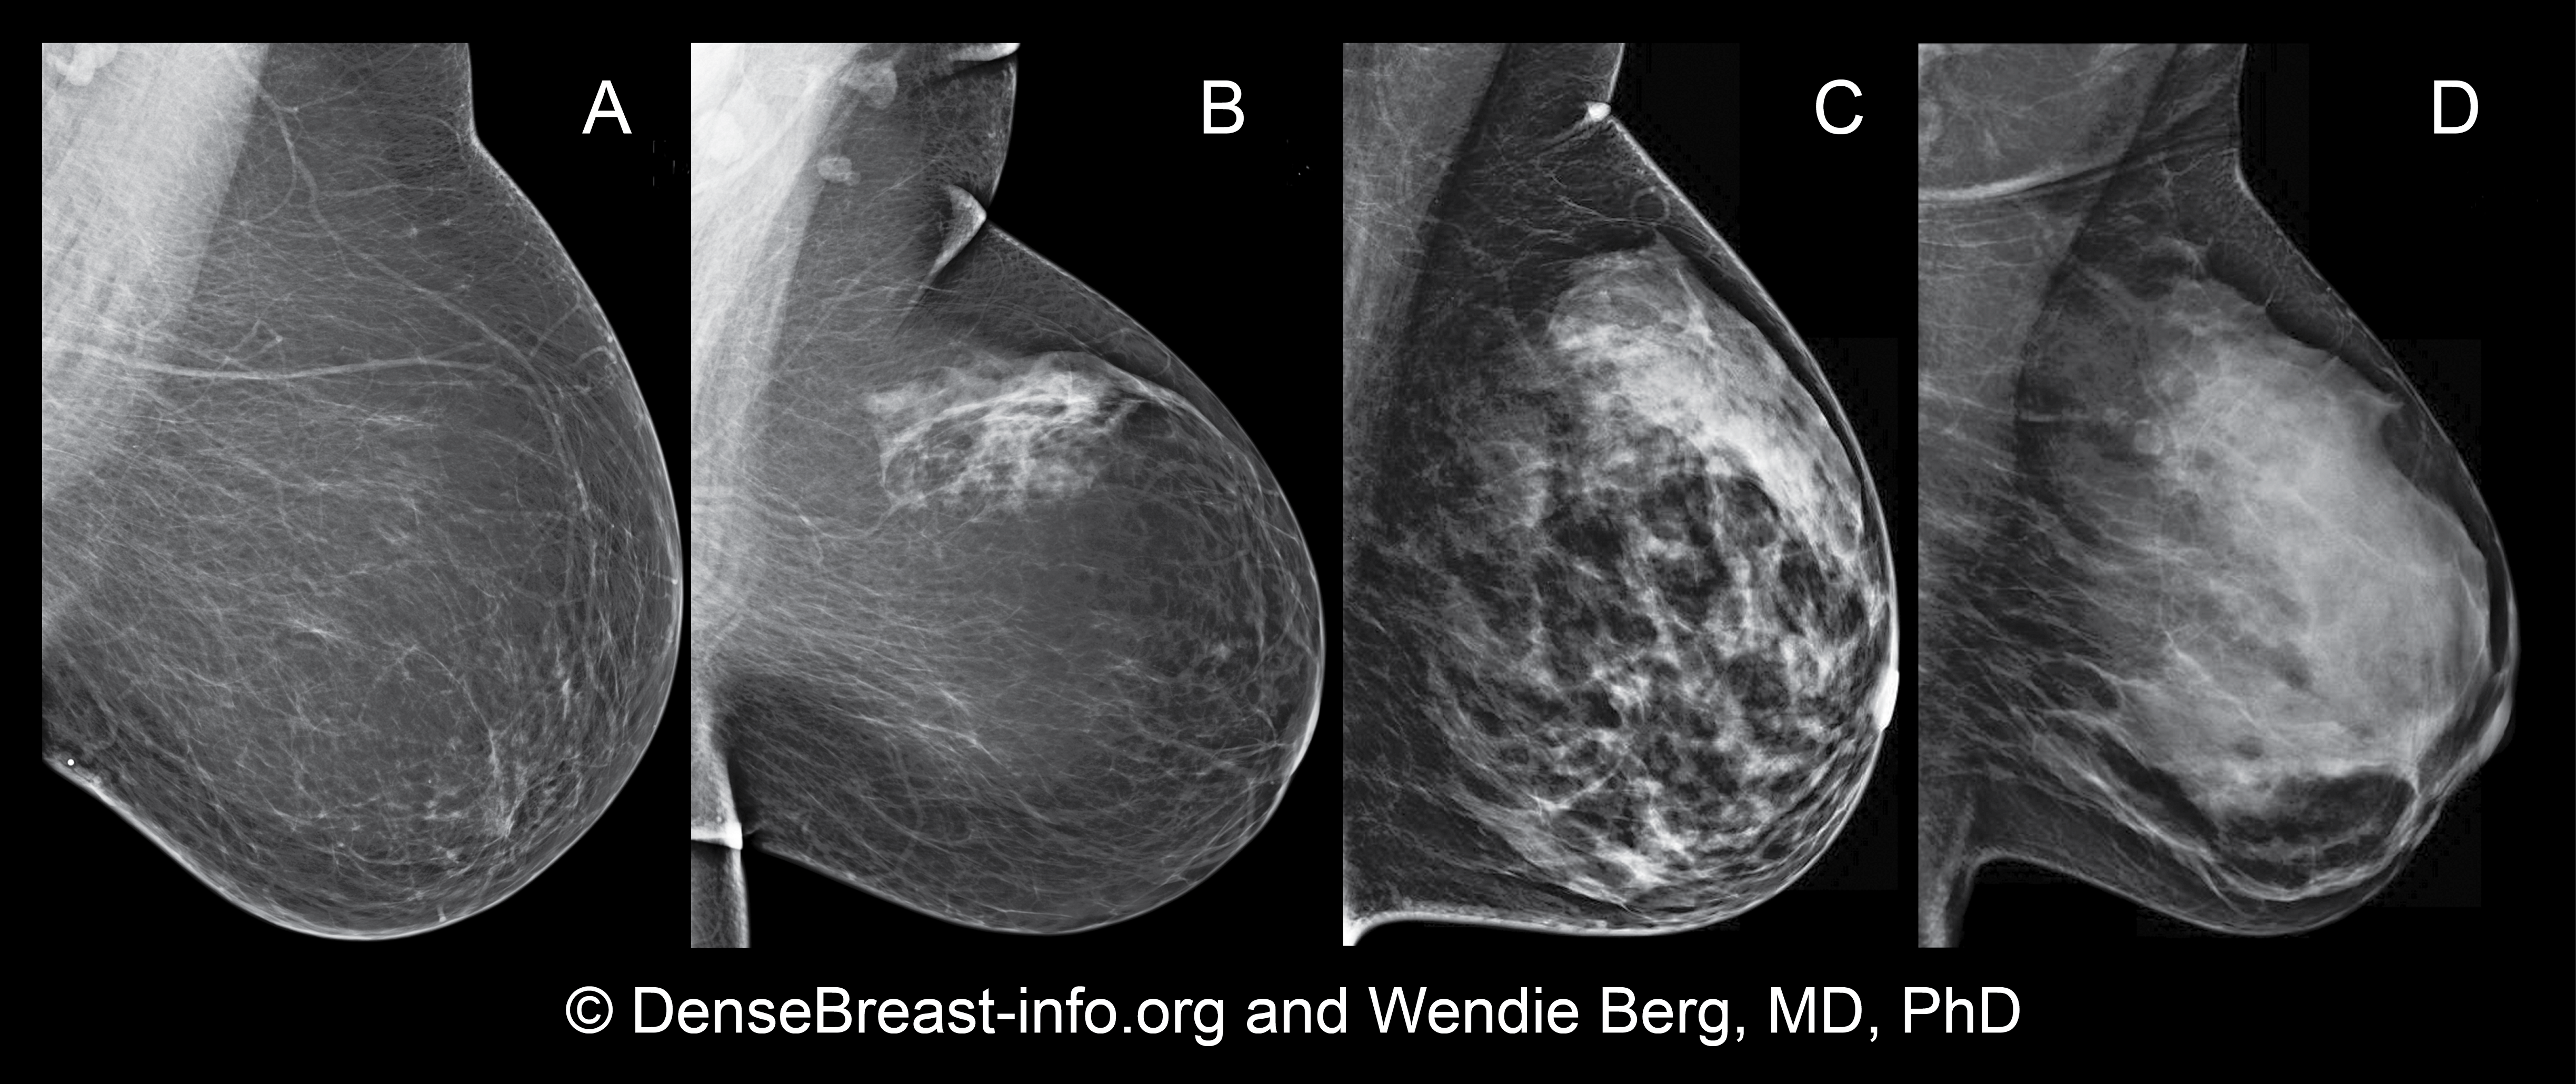 признаки рака груди у женщин первые признаки фото 69